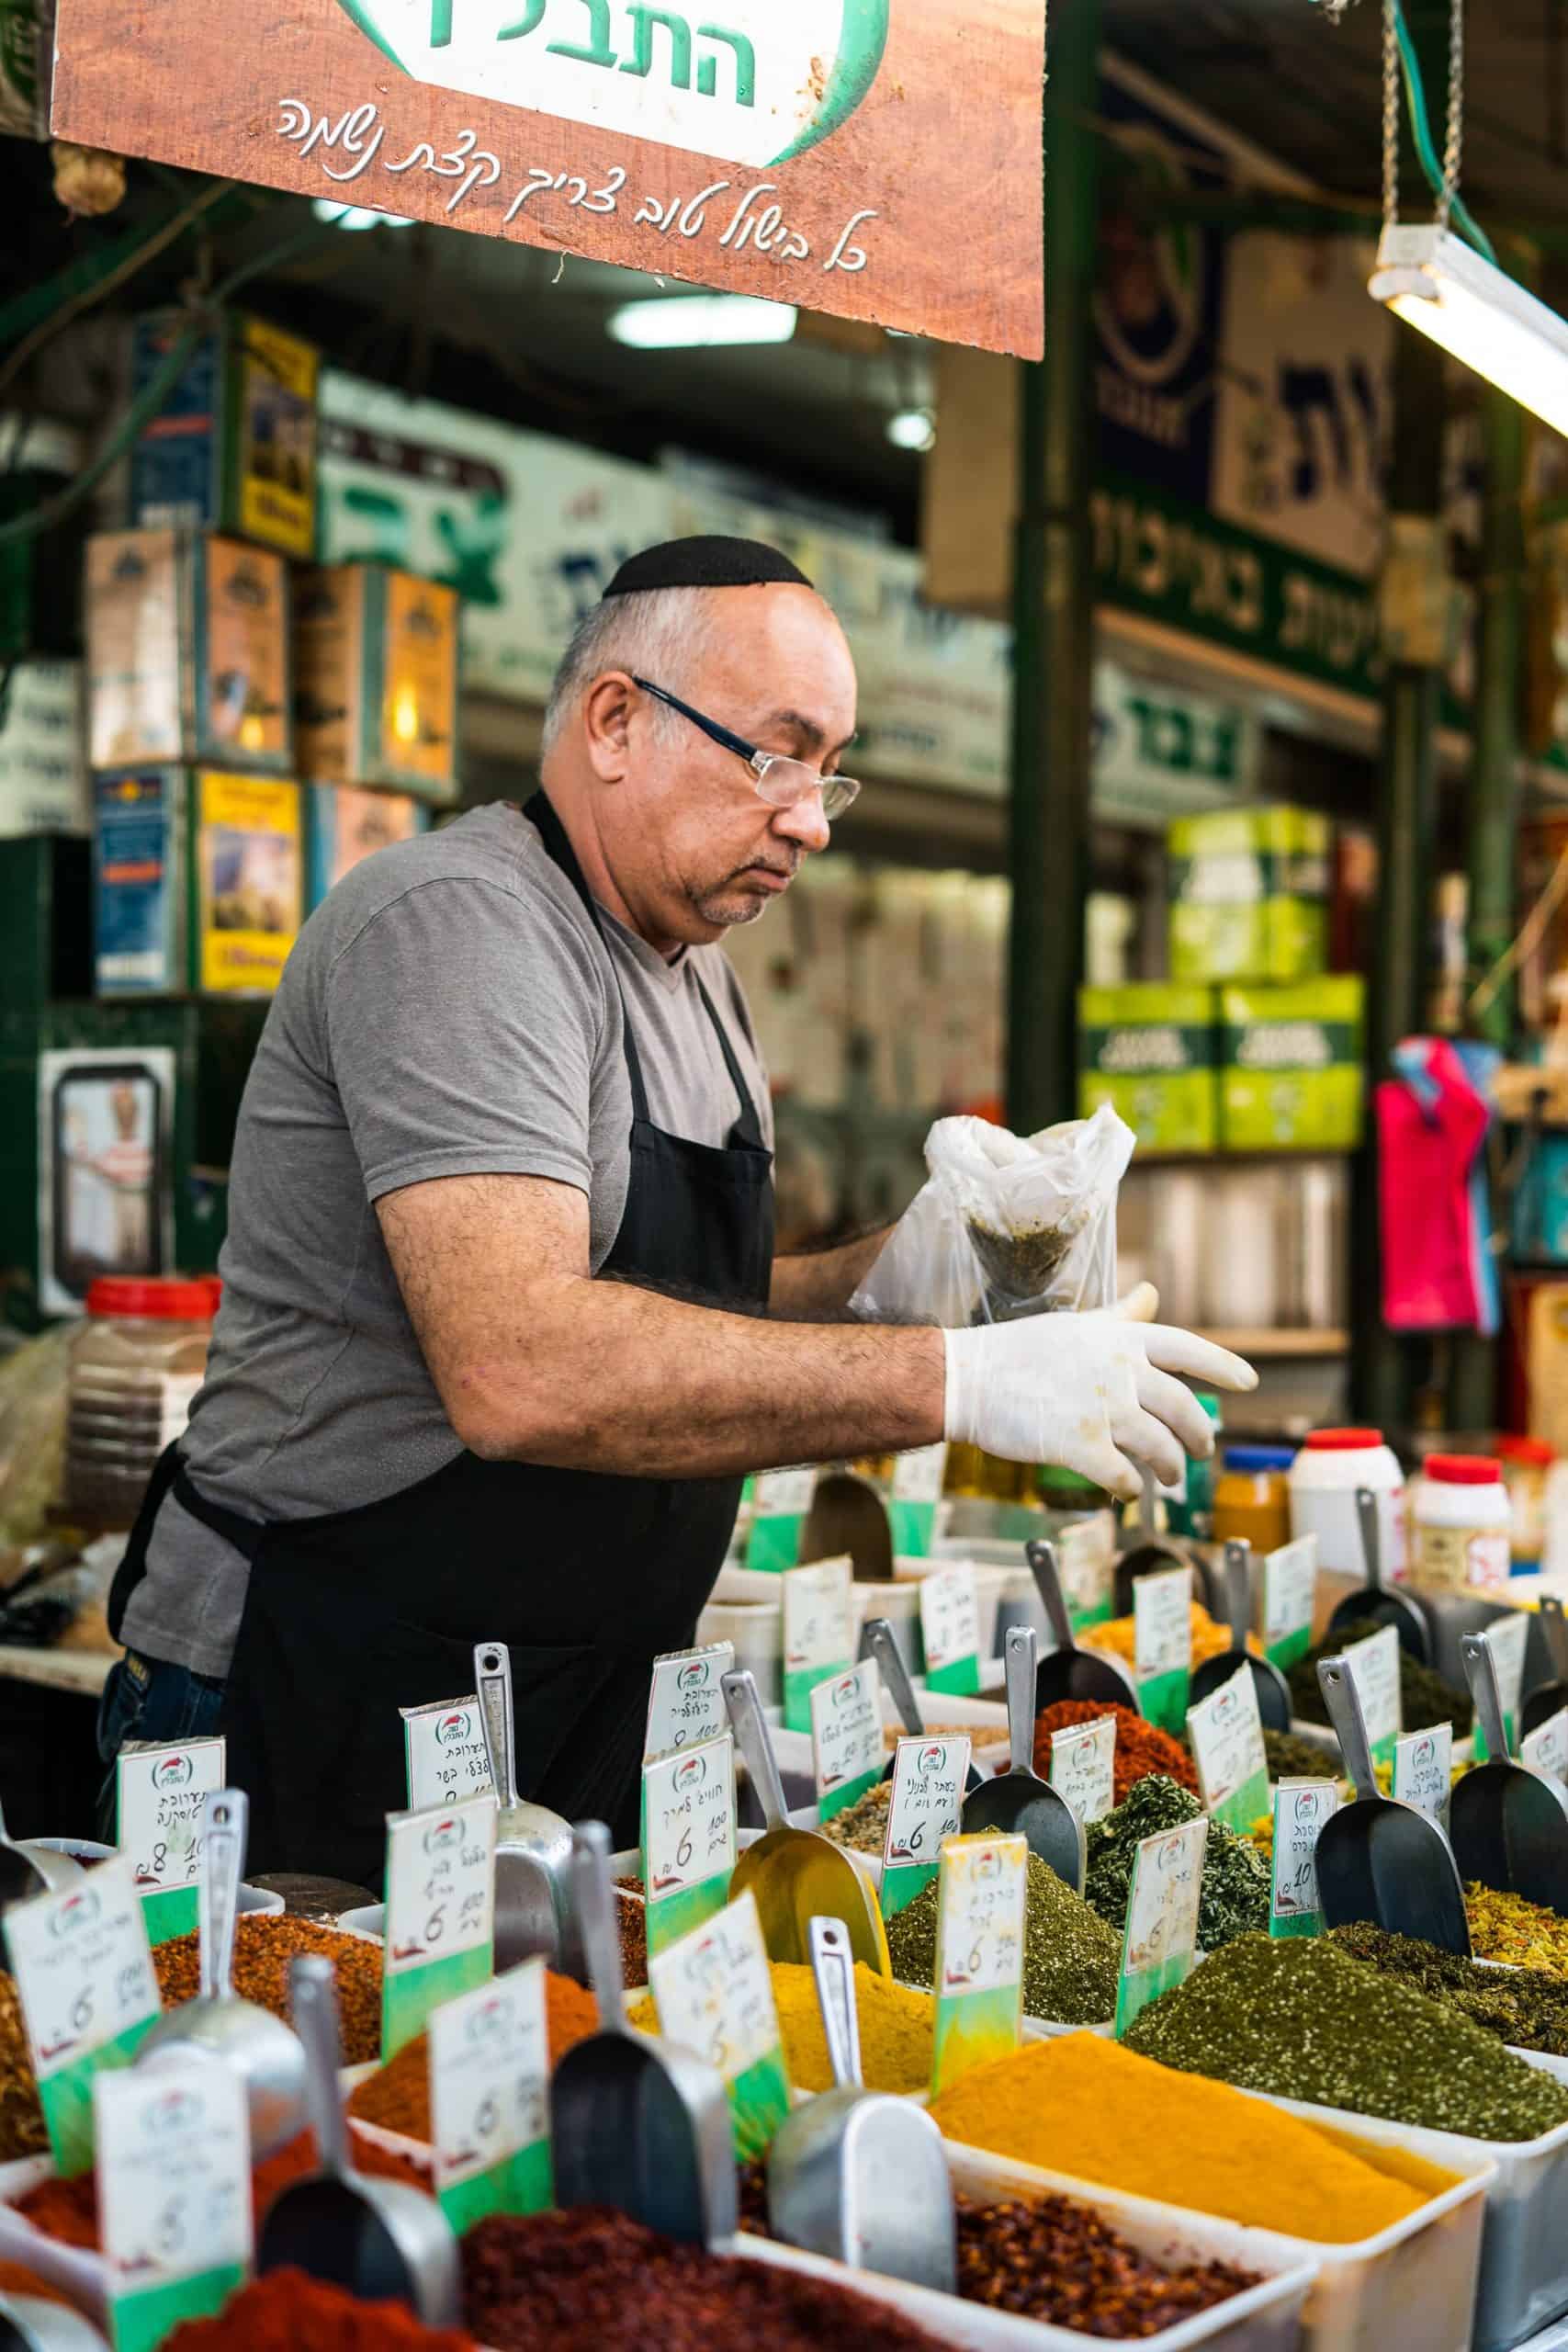 Best things to do in Tel Aviv Israel - Mark Gordon - Spice merchant by Simon Goetz on Unsplash